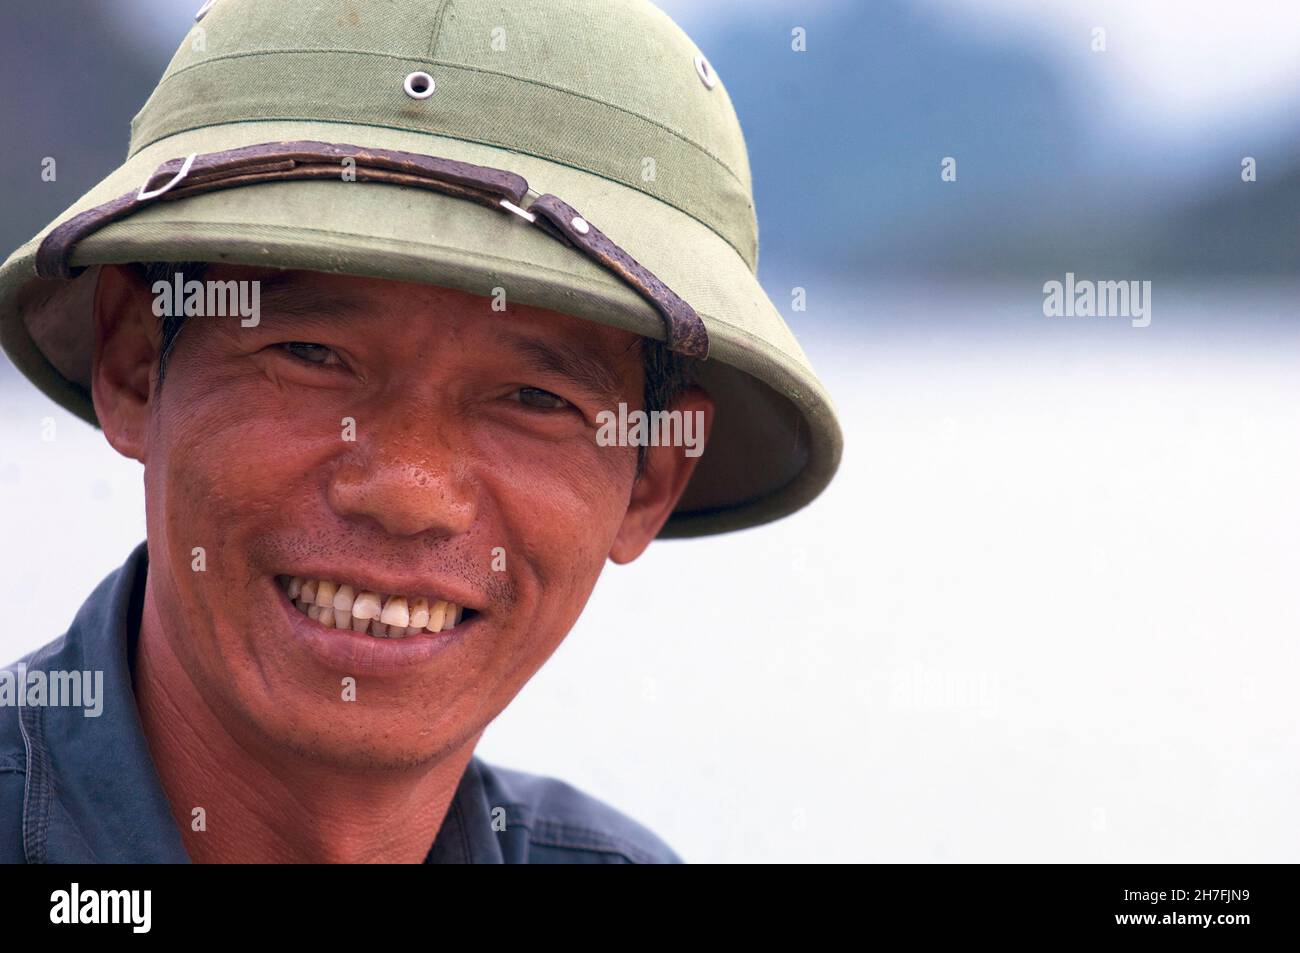 VIETNAM, HA LONG, MAN ON THE HALONG BAY, ON THE HEARTH PART Stock Photo